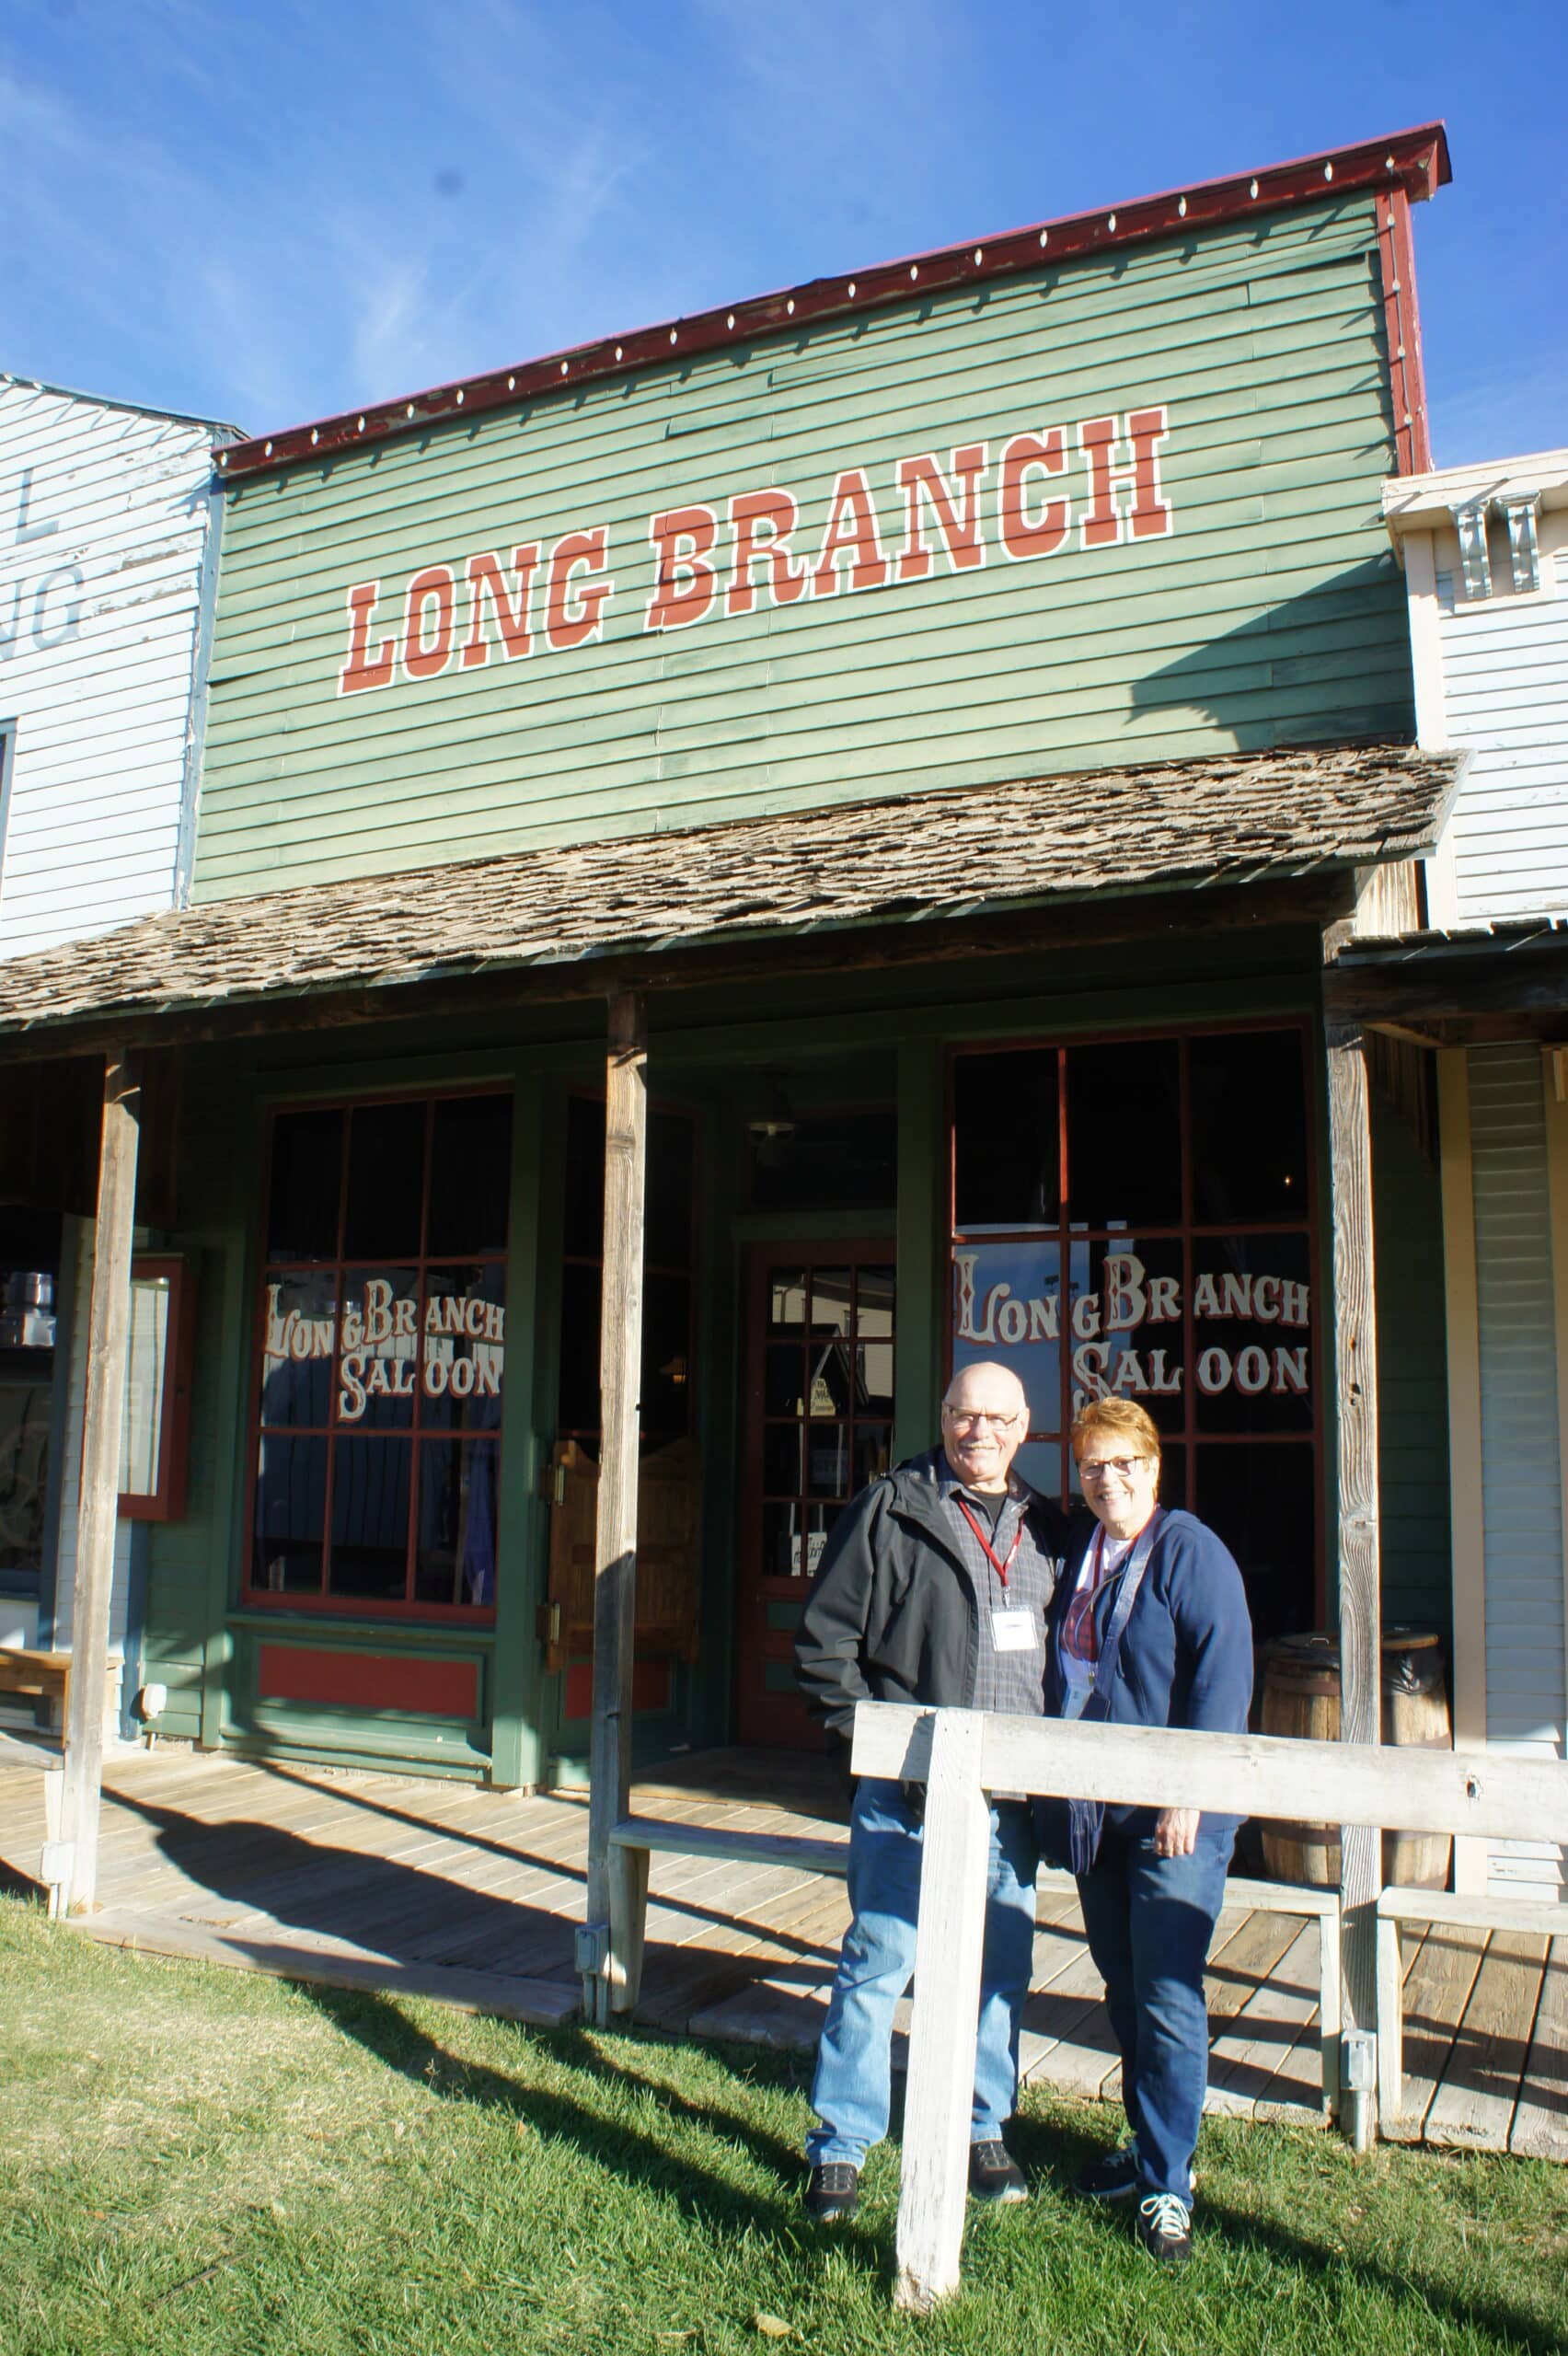 Long Branch Saloon